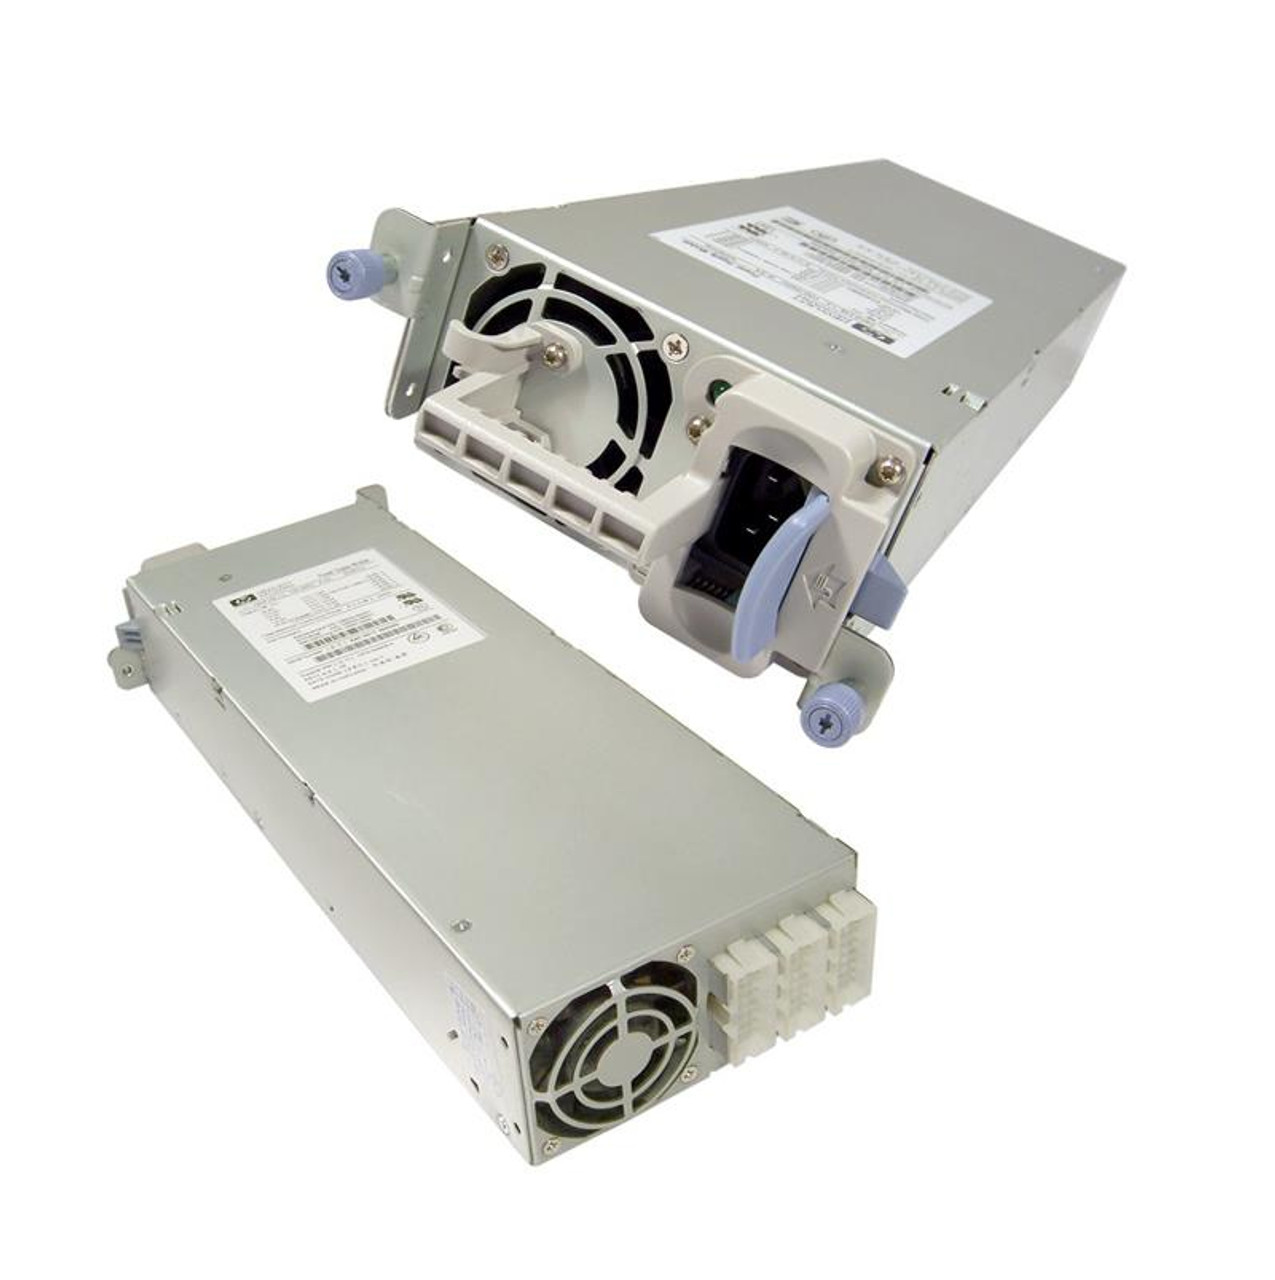 D8520-69001 HP 350-Watts Redundant Hot Swap Power Supply for NetServer LC2000